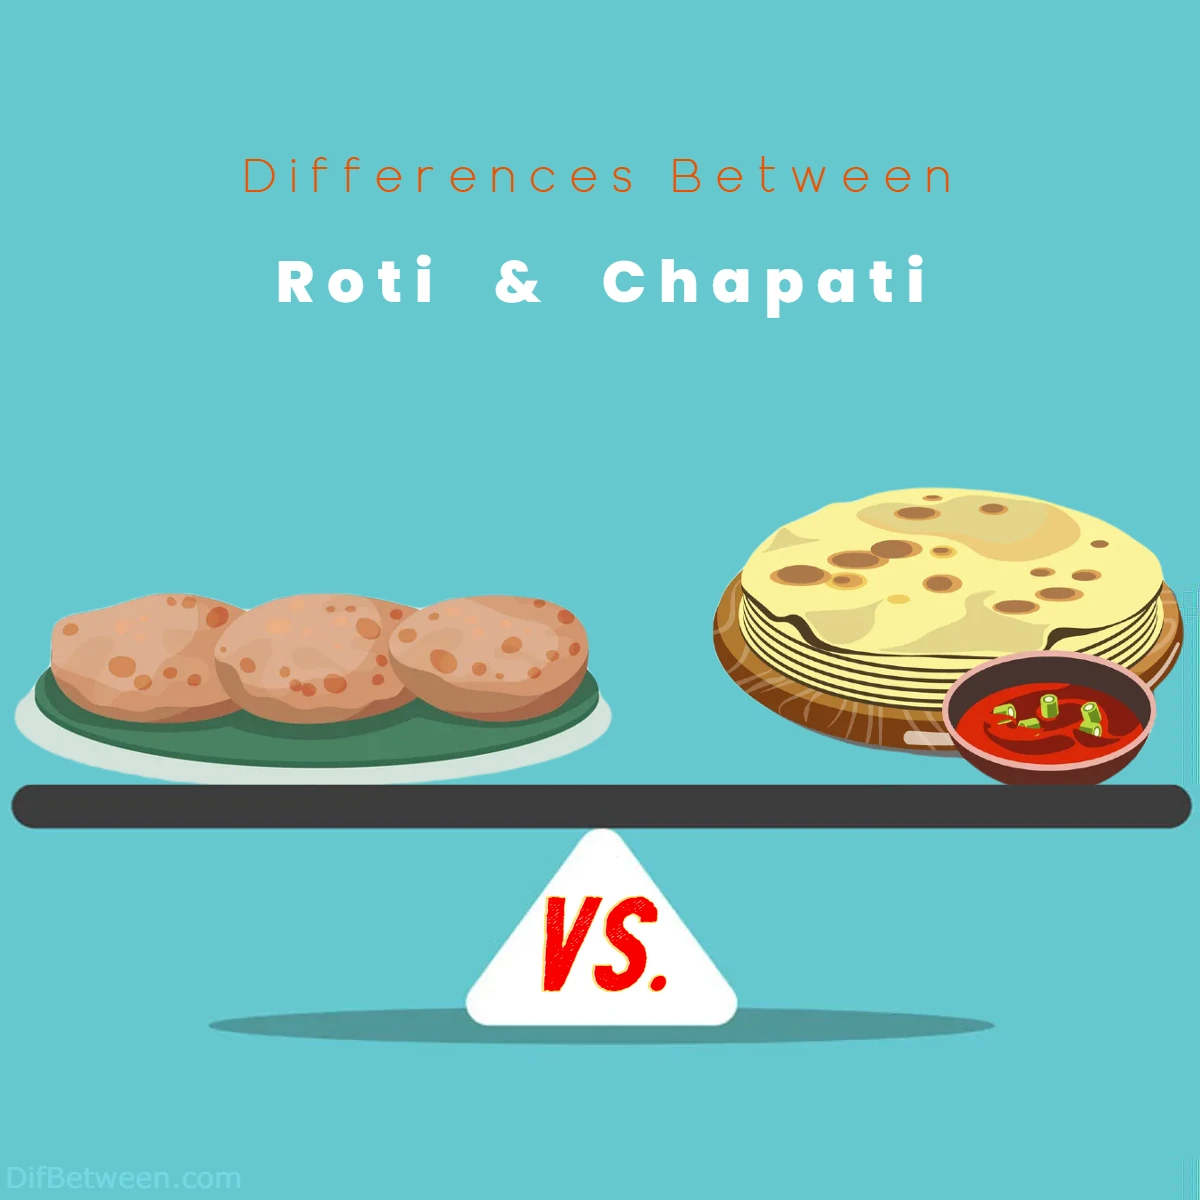 Differences Between Roti vs Chapati